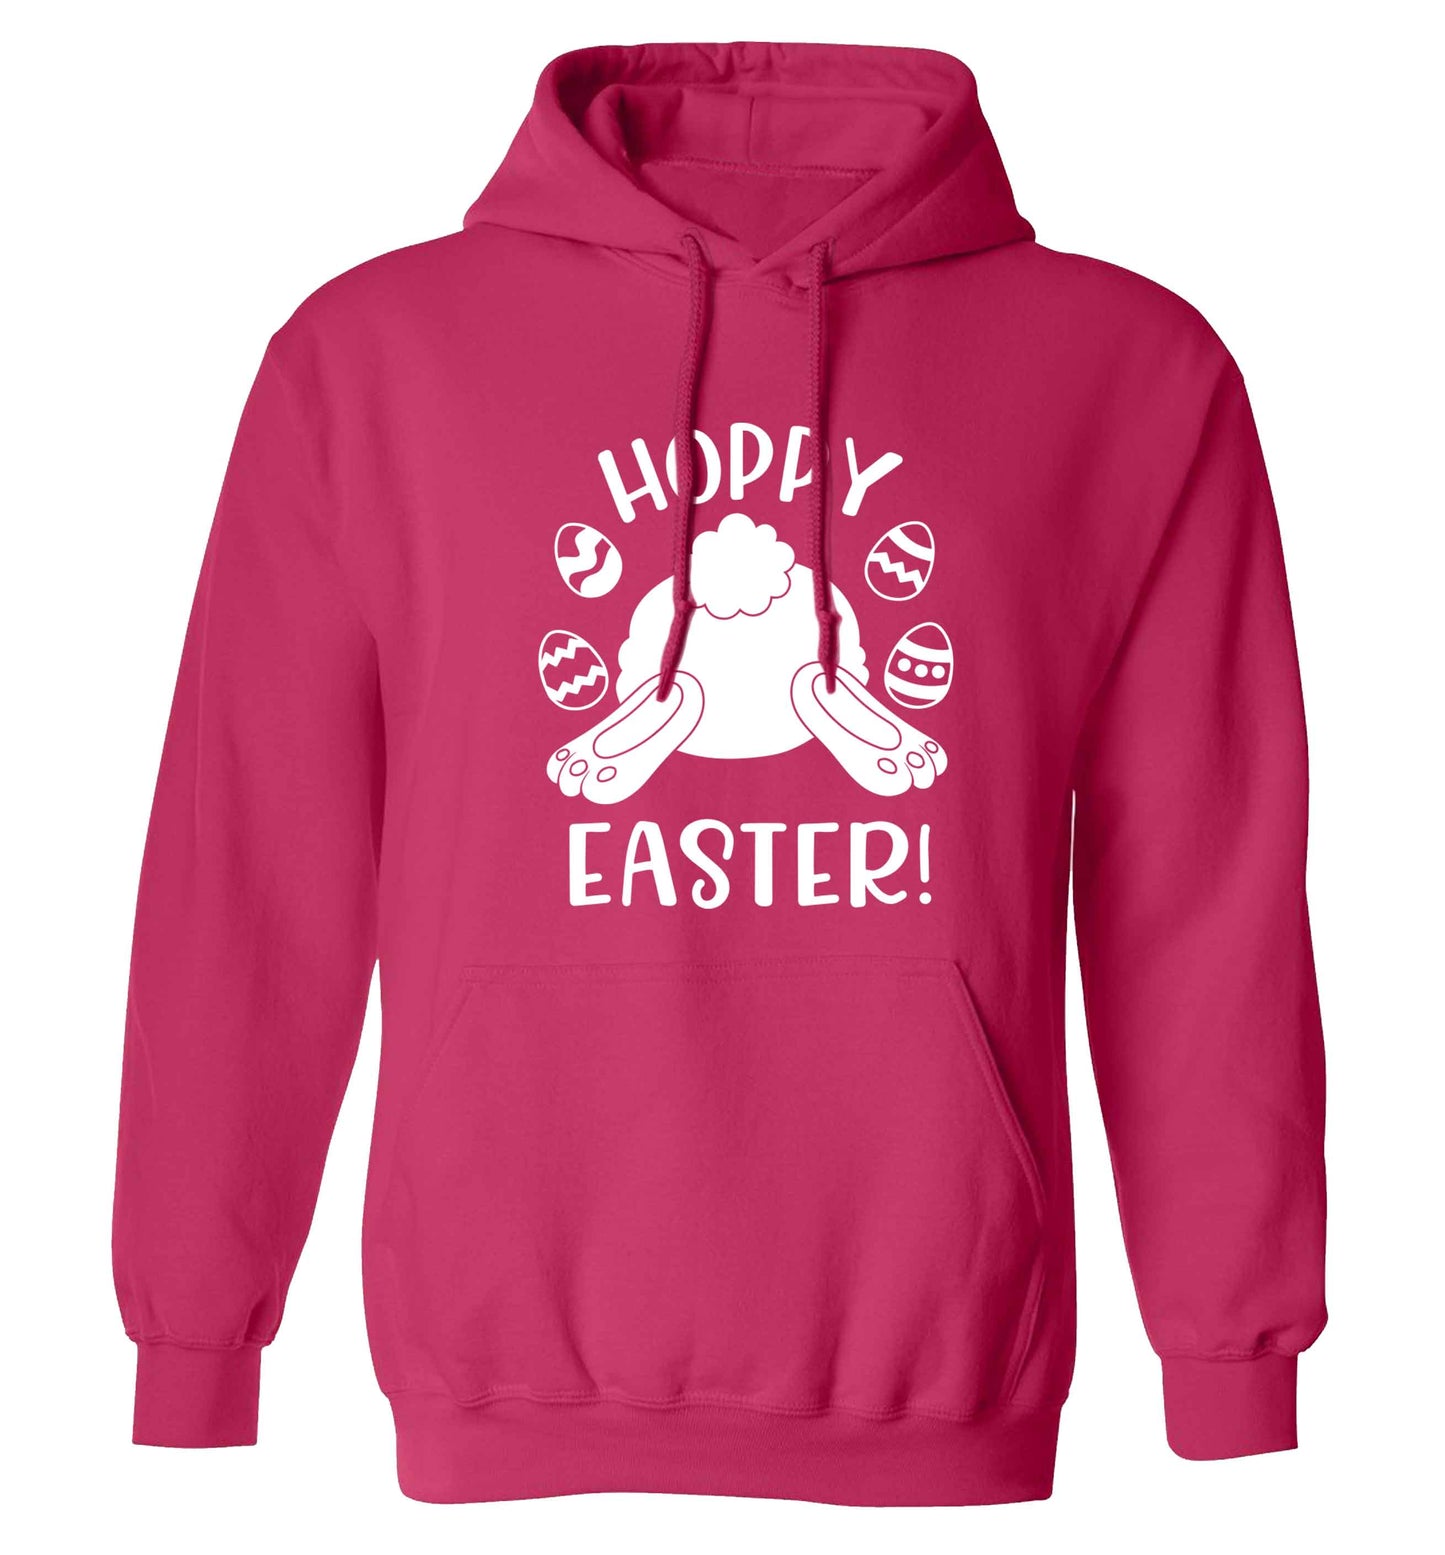 Hoppy Easter adults unisex pink hoodie 2XL